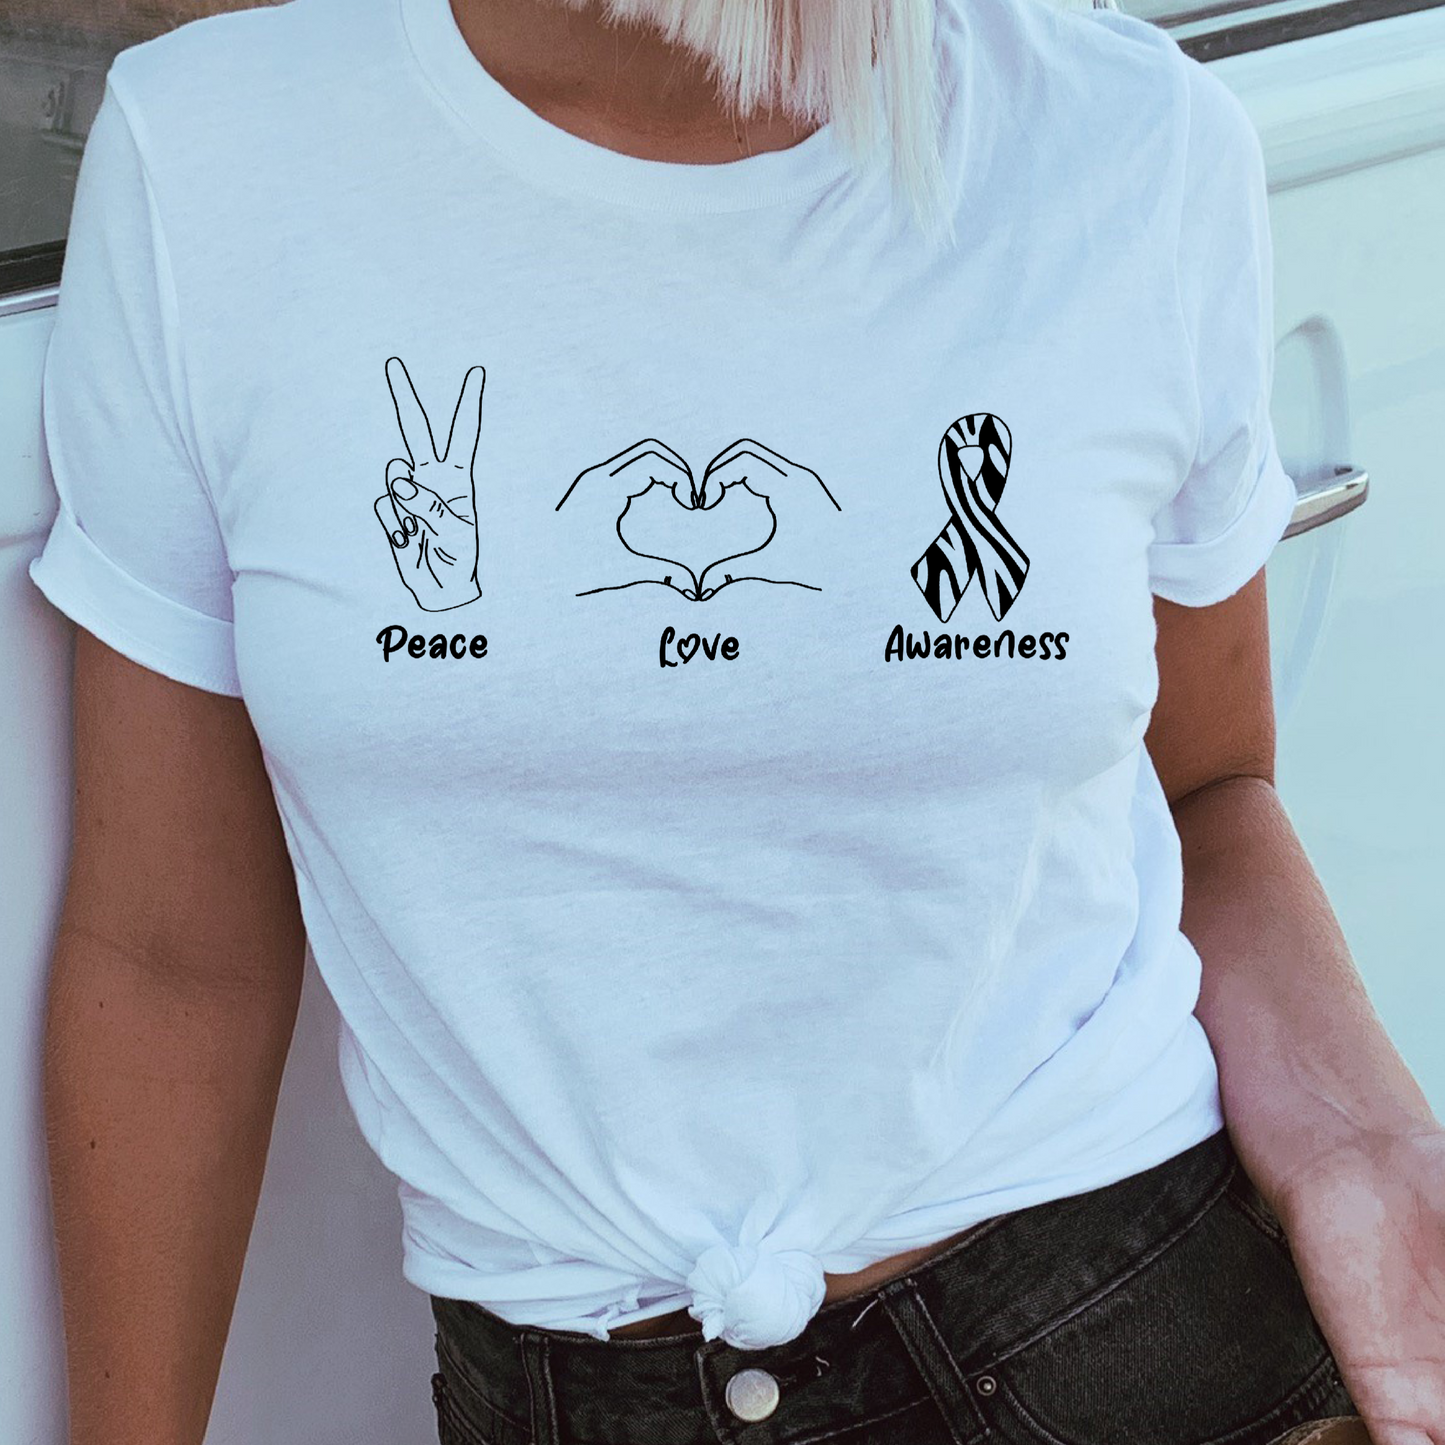 Peace, Love, Awareness T-Shirt